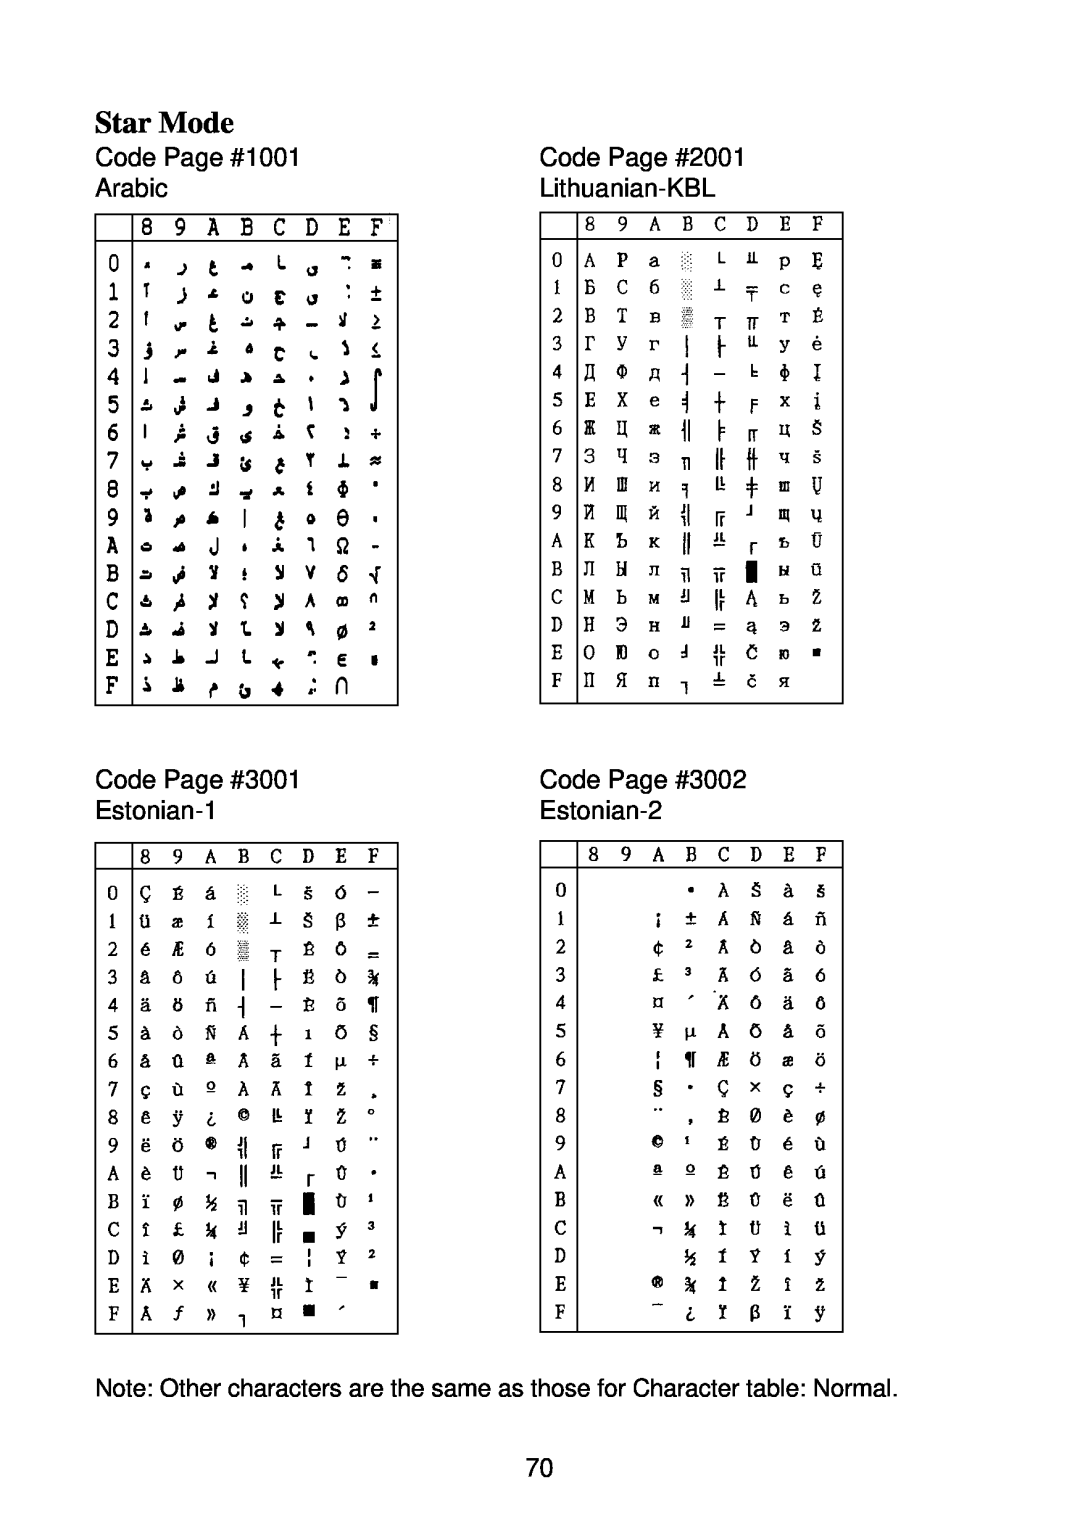 Star Micronics SP2000 manual Code Page #1001 Arabic Code Page #3001 Estonian-1, Star Mode 